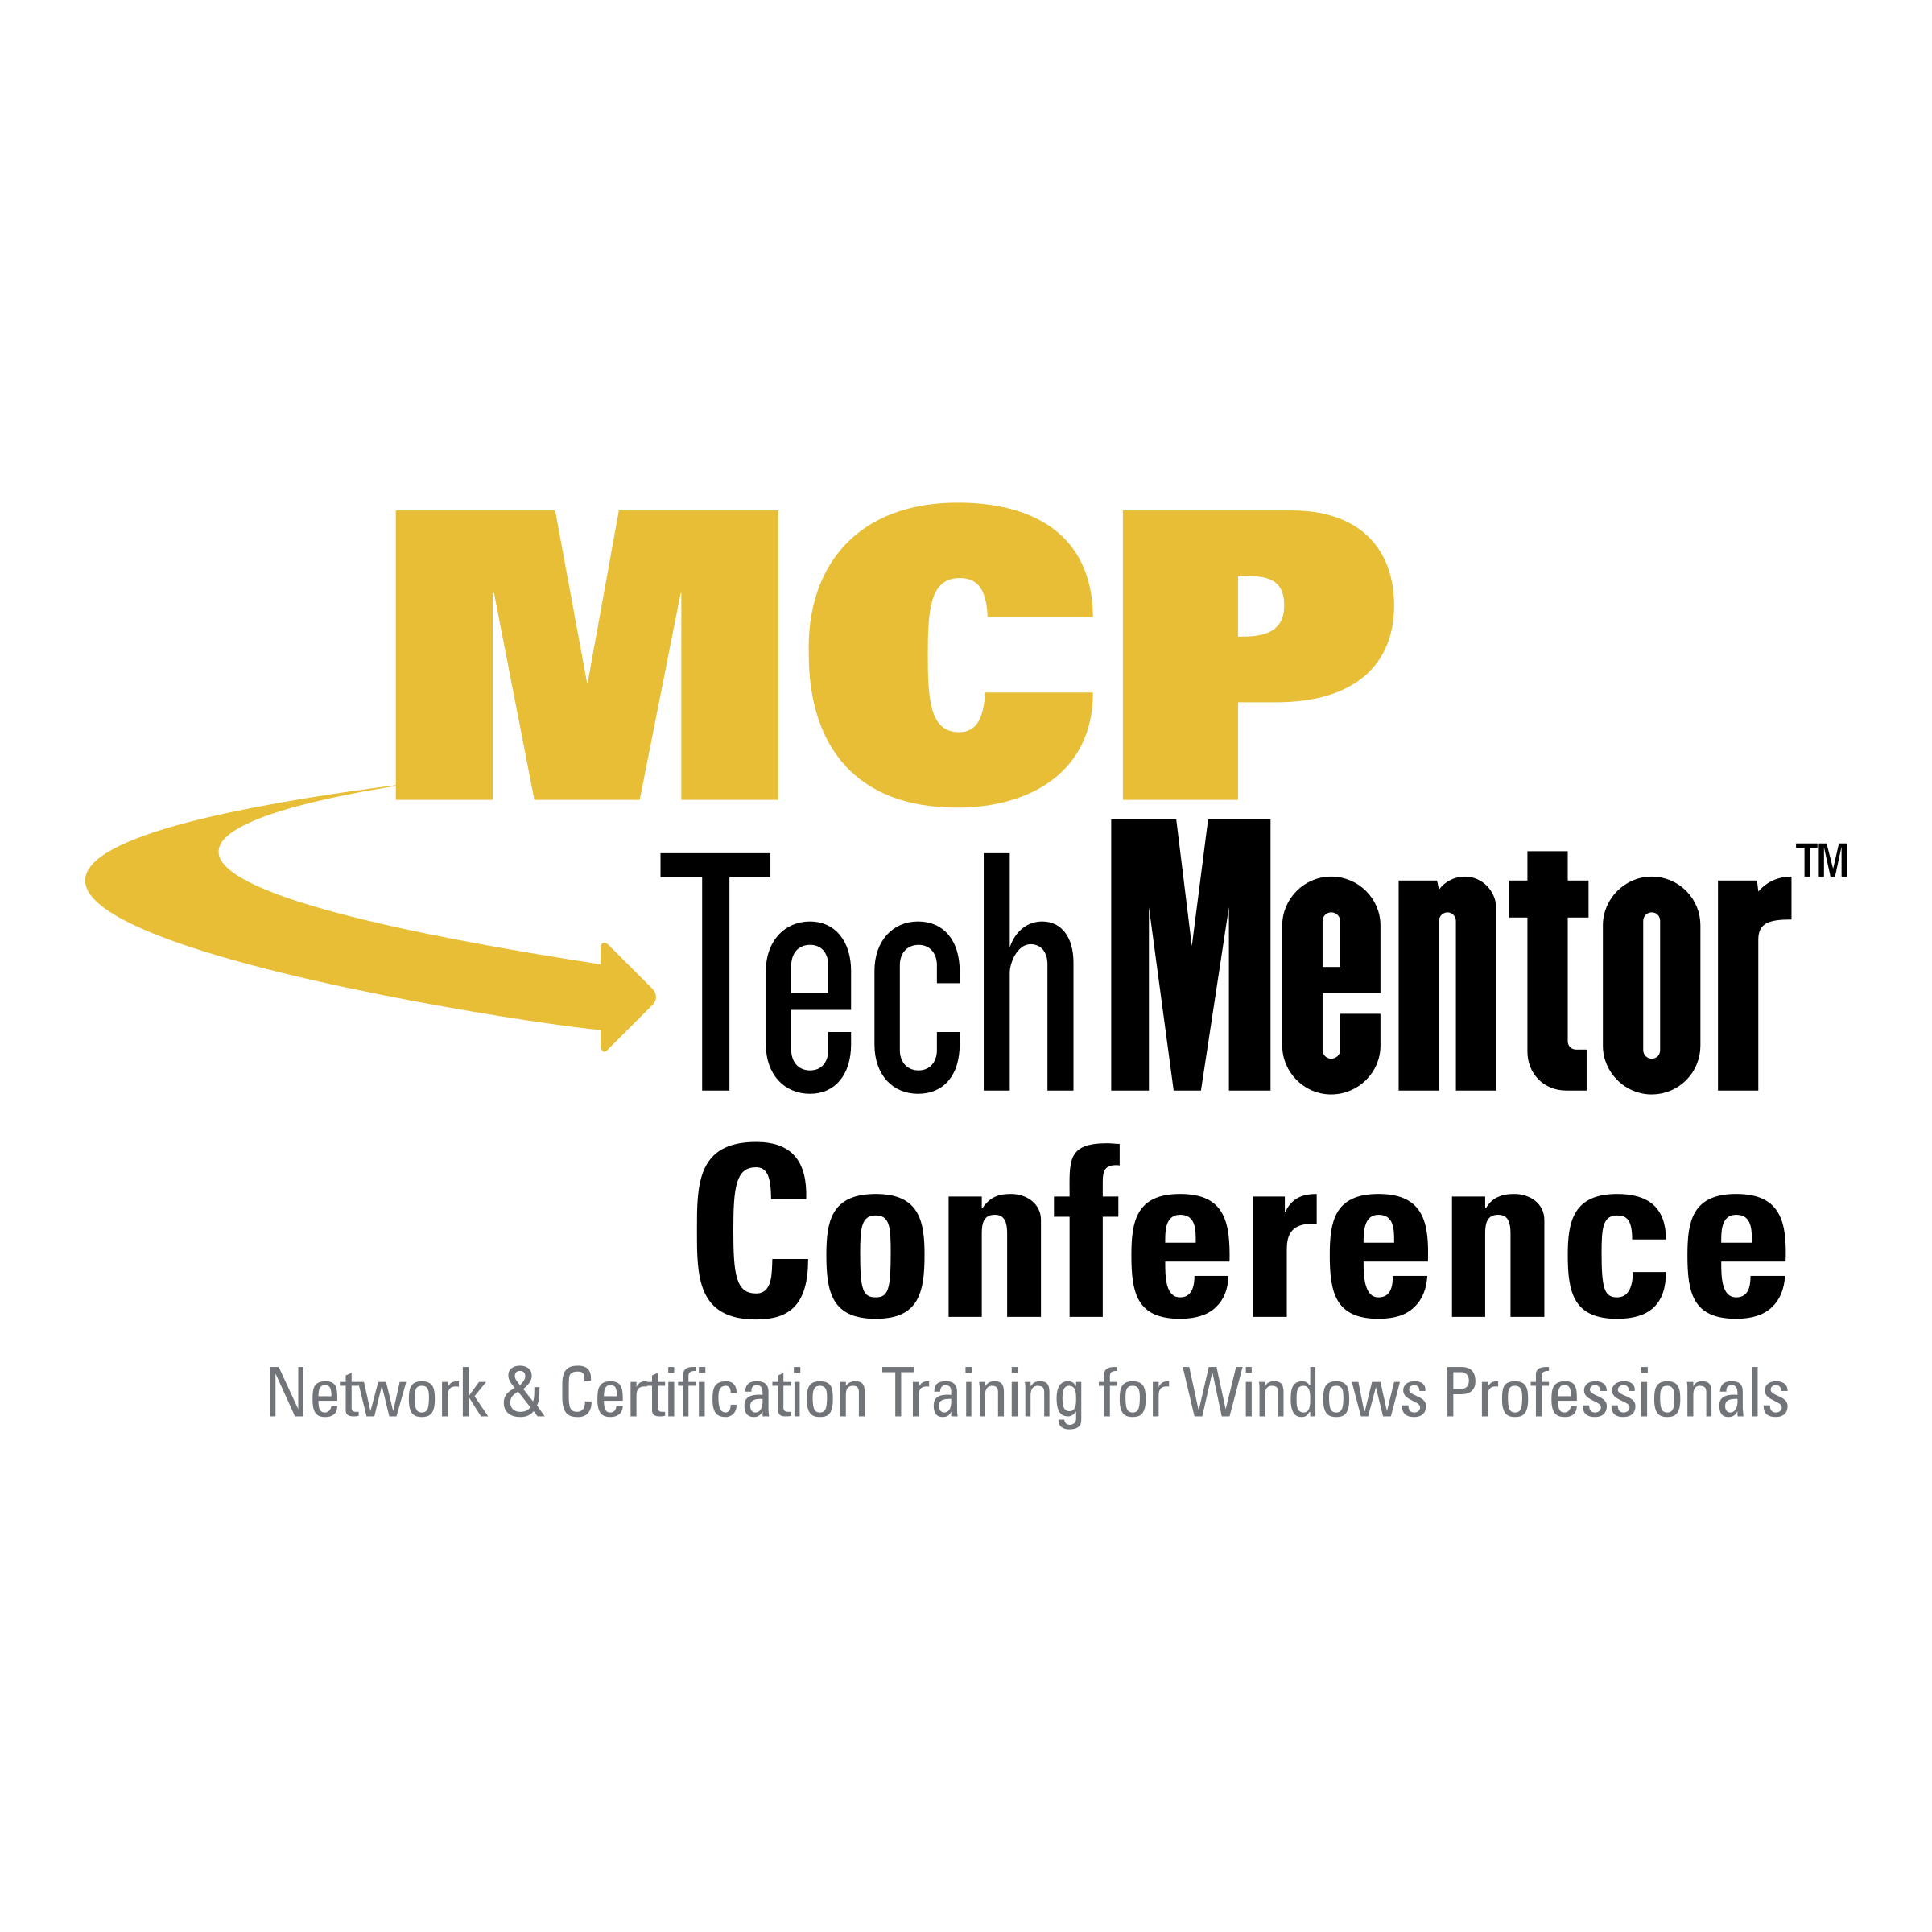 MCP Logo - MCP TechMentor Conference Logo PNG Transparent & SVG Vector ...